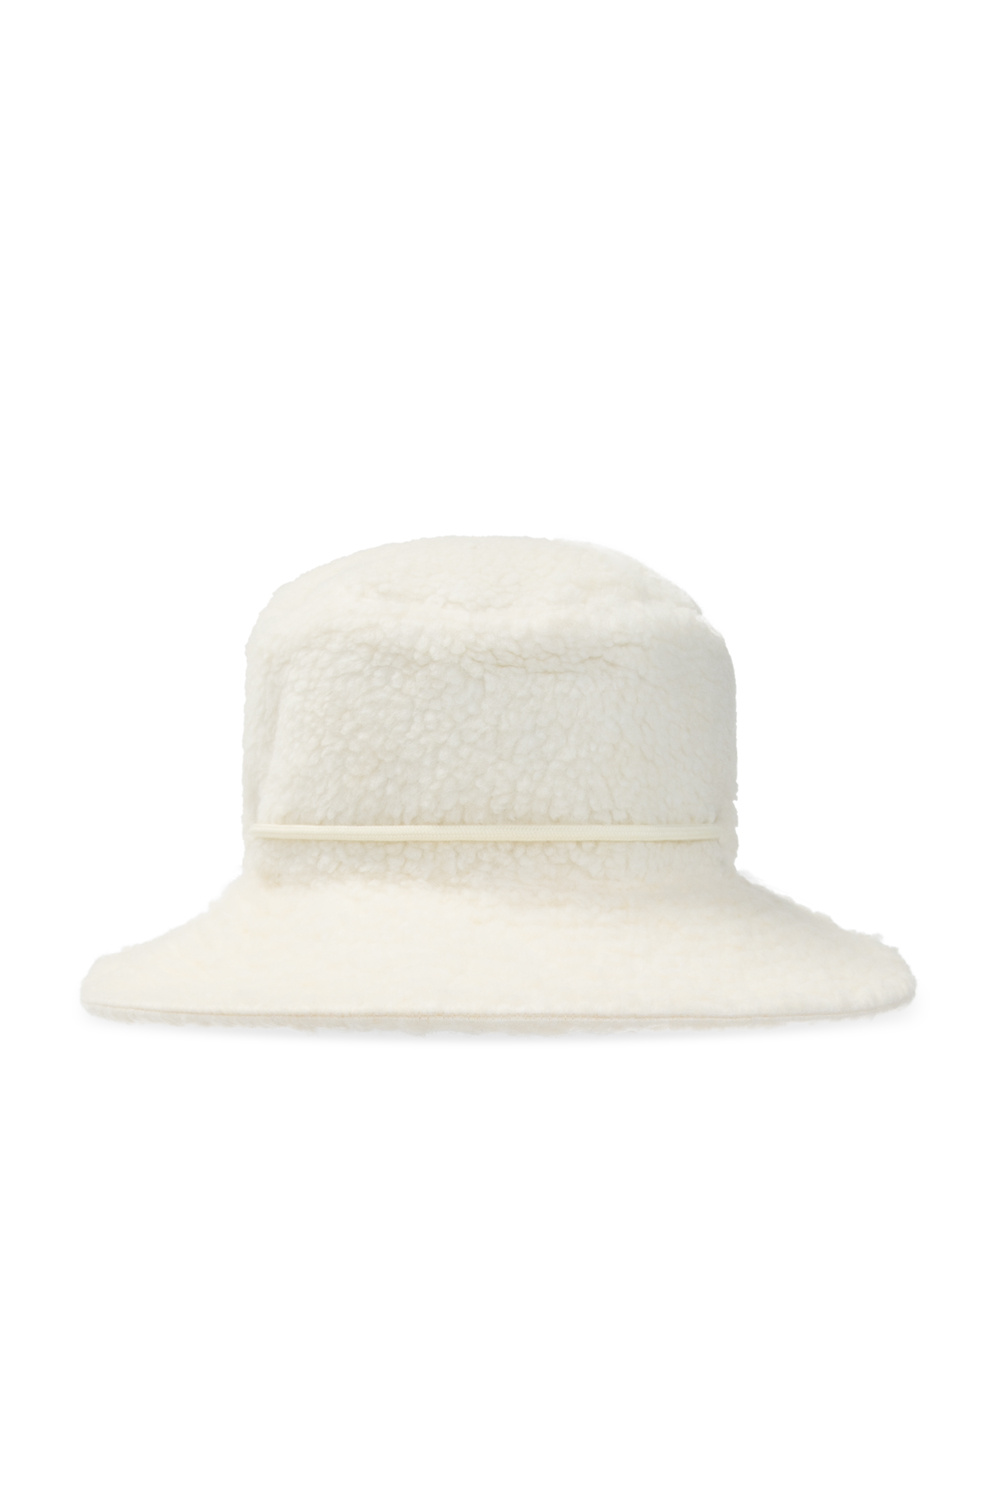 Khrisjoy Faux fur hat reversible with logo